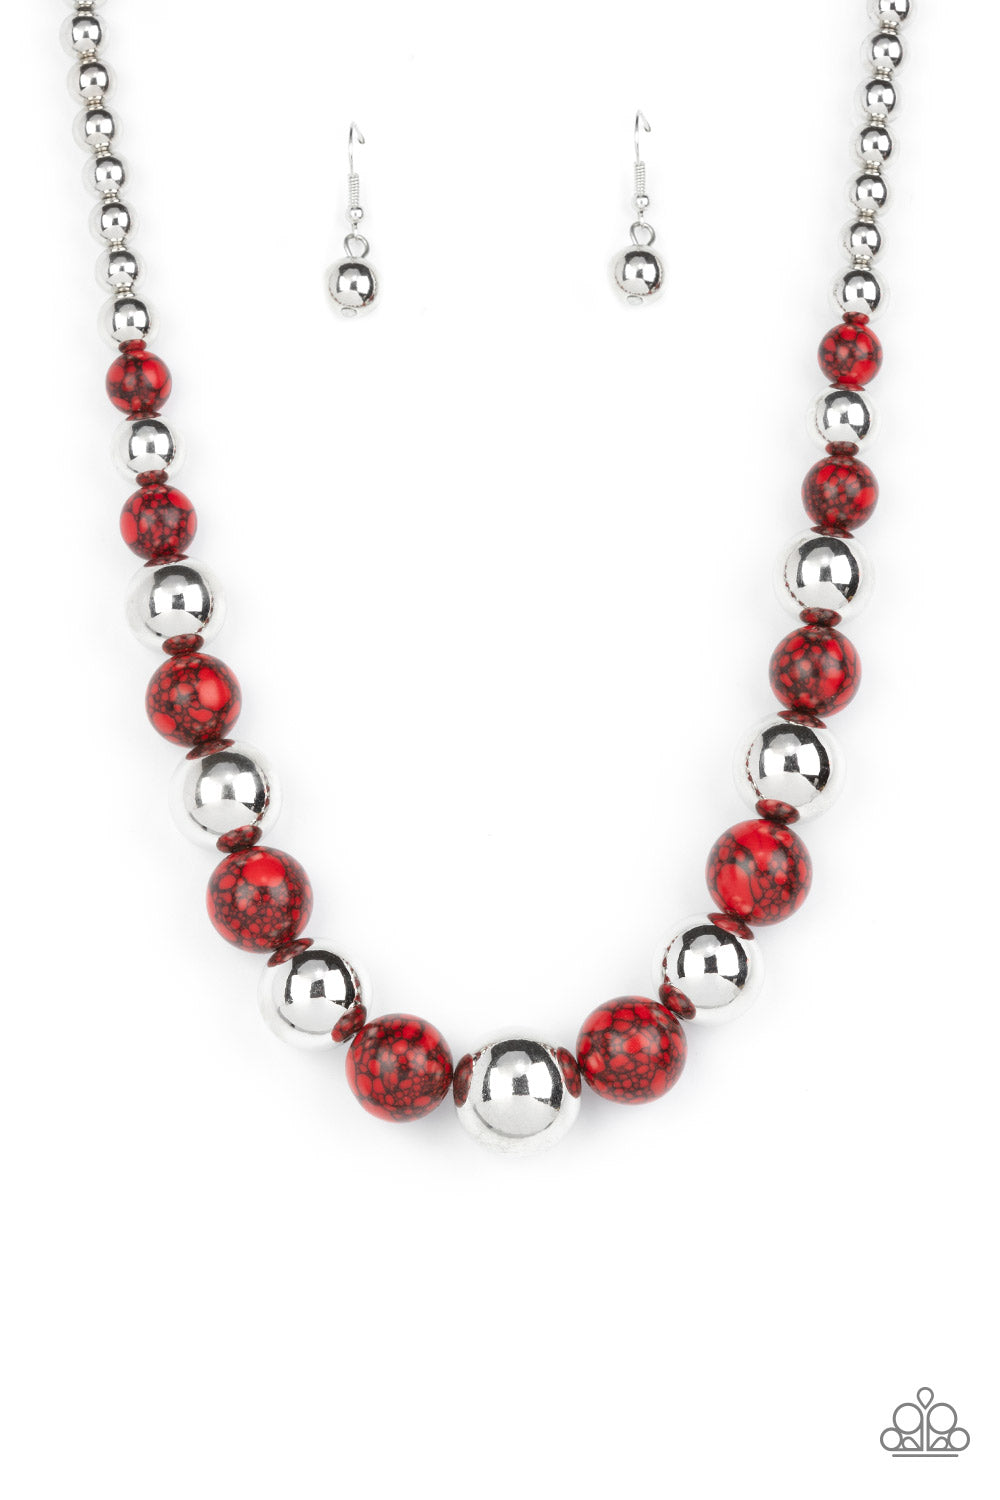 Stone Age Adventurer - red - Paparazzi necklace